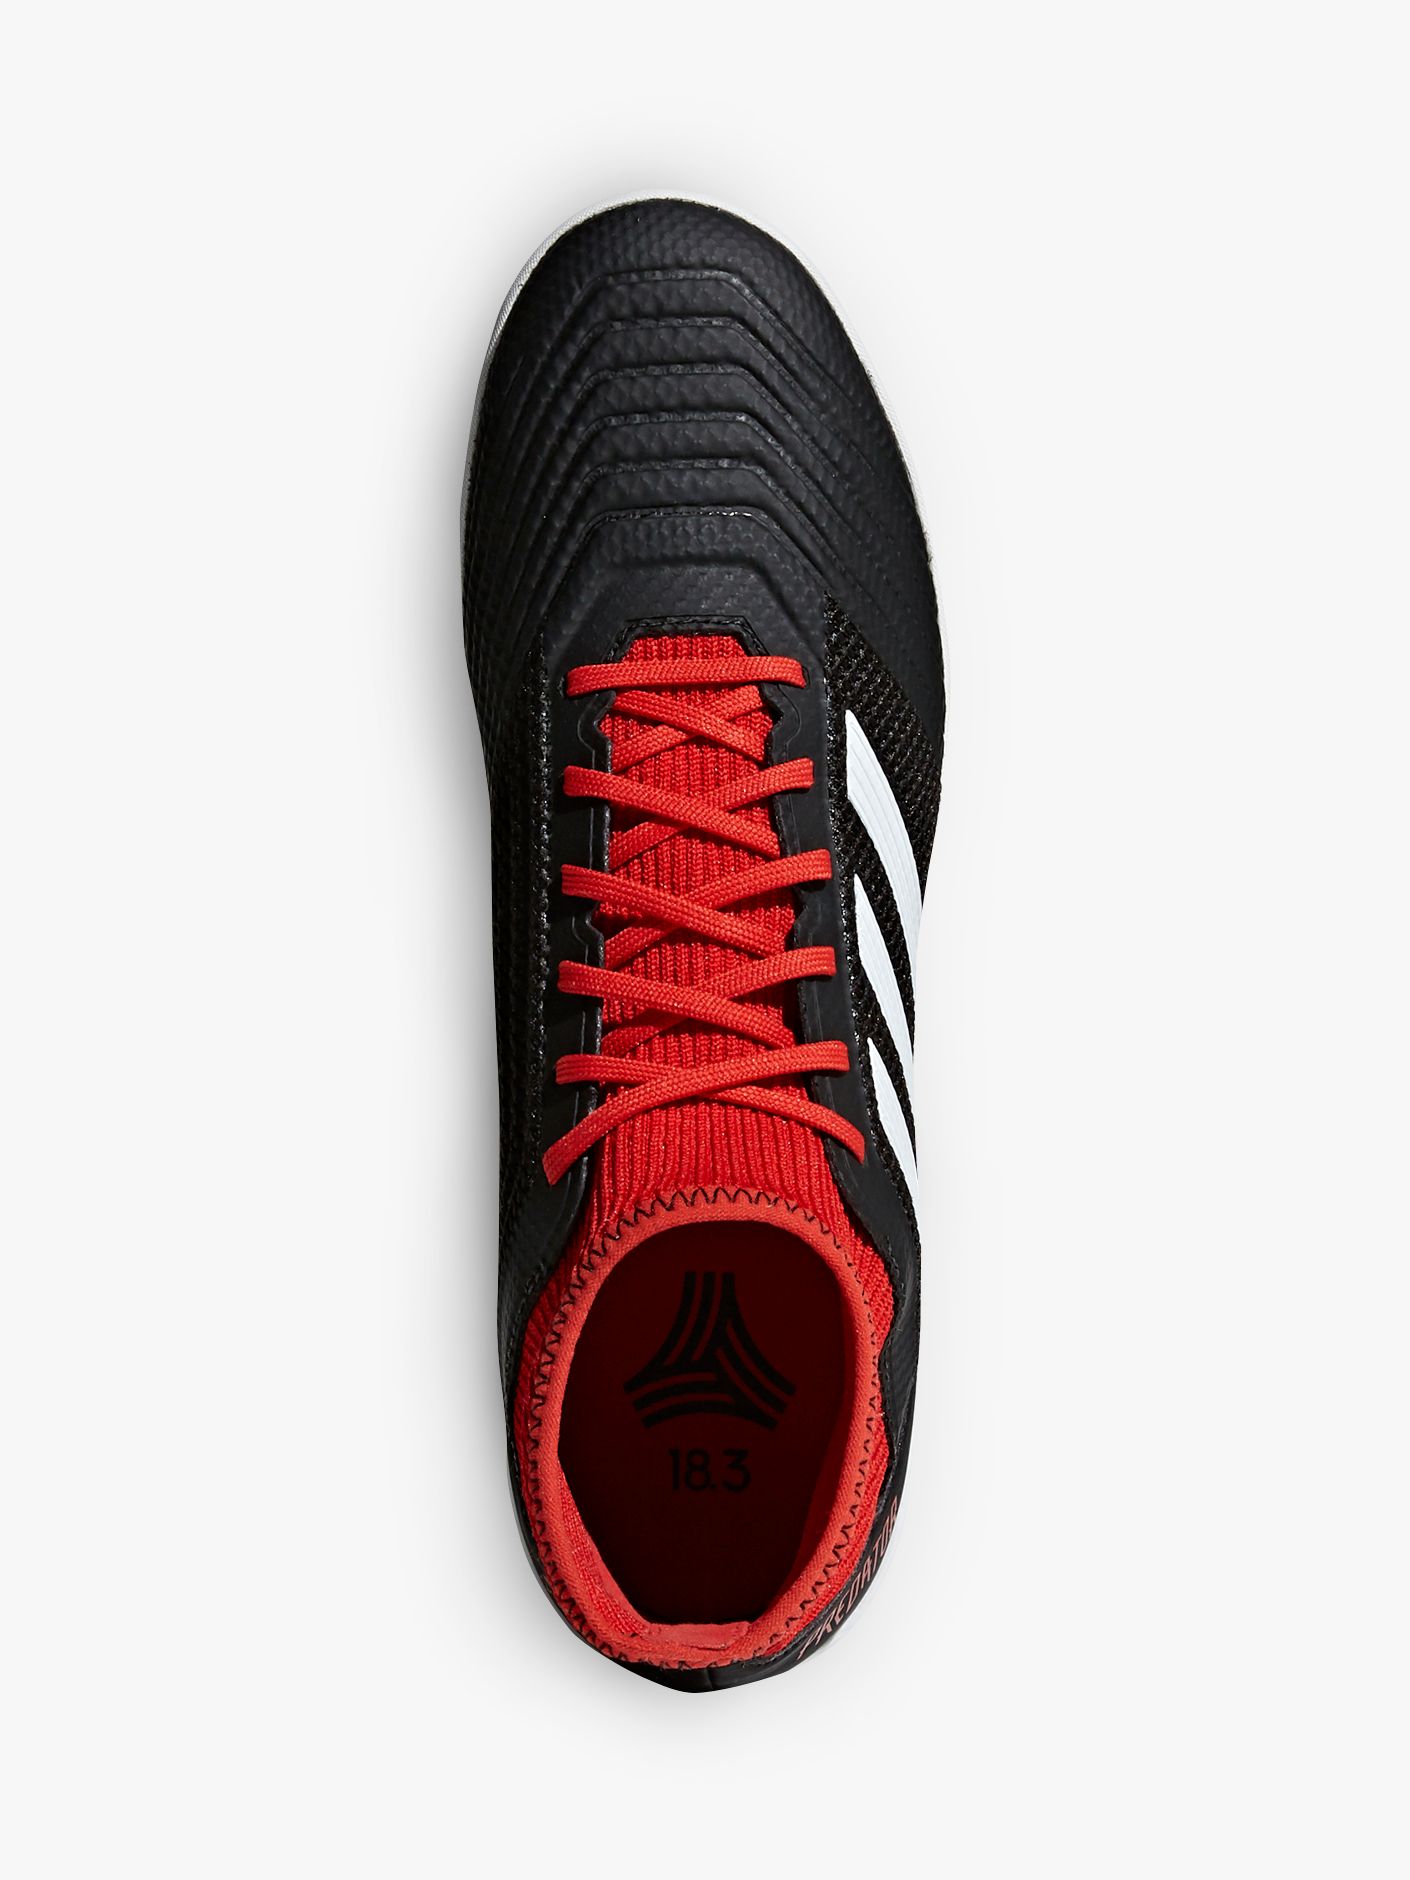 adidas predator astro turf football boots